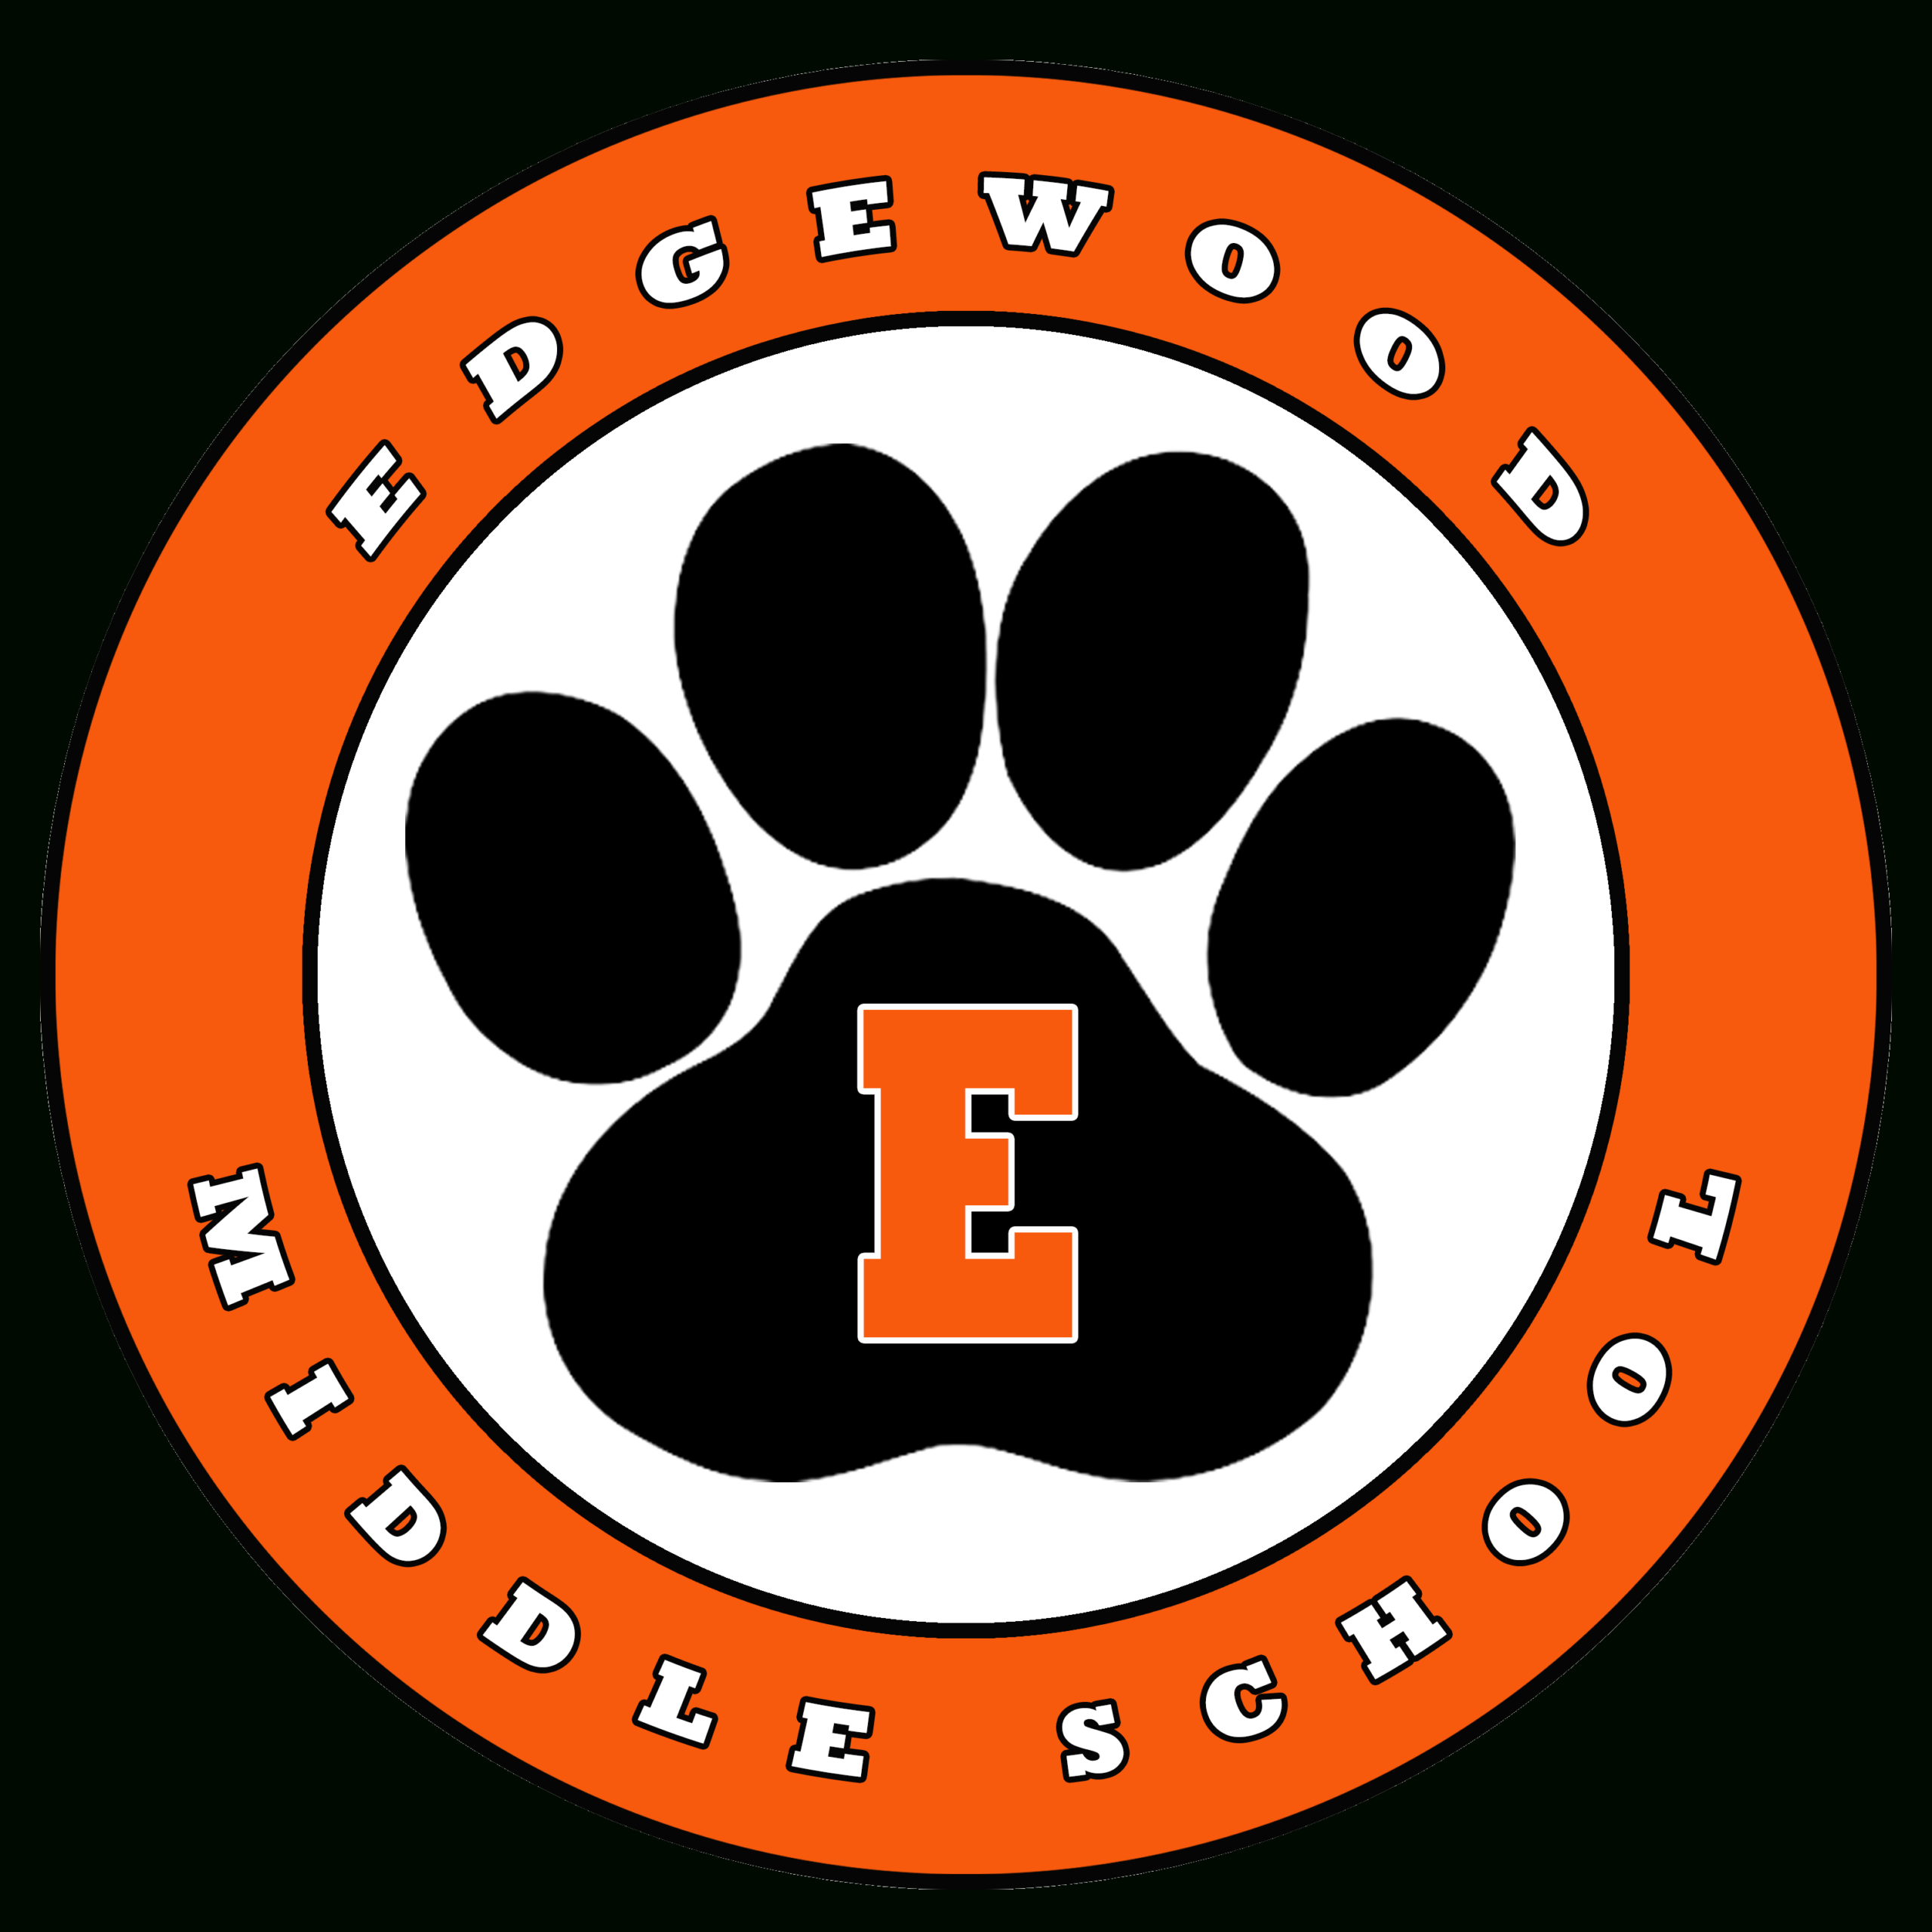 Testing Designs | Edgewood Middle School-Ppe 2021 Employee Attendance Calendar